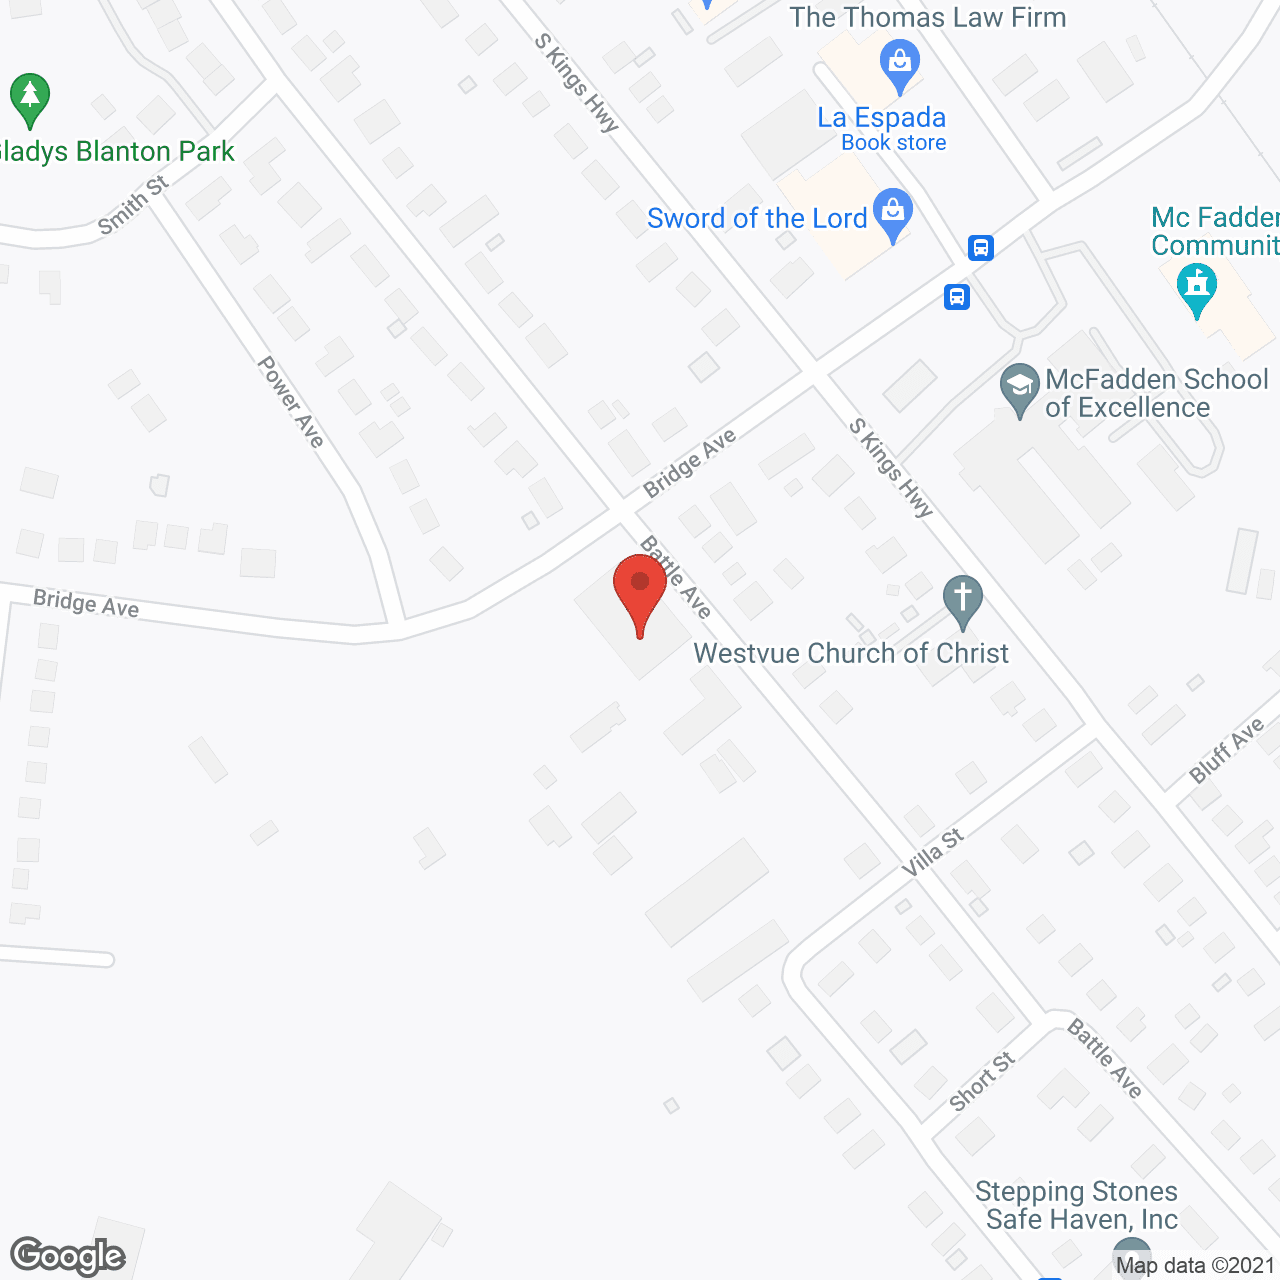 Sunshine Square in google map